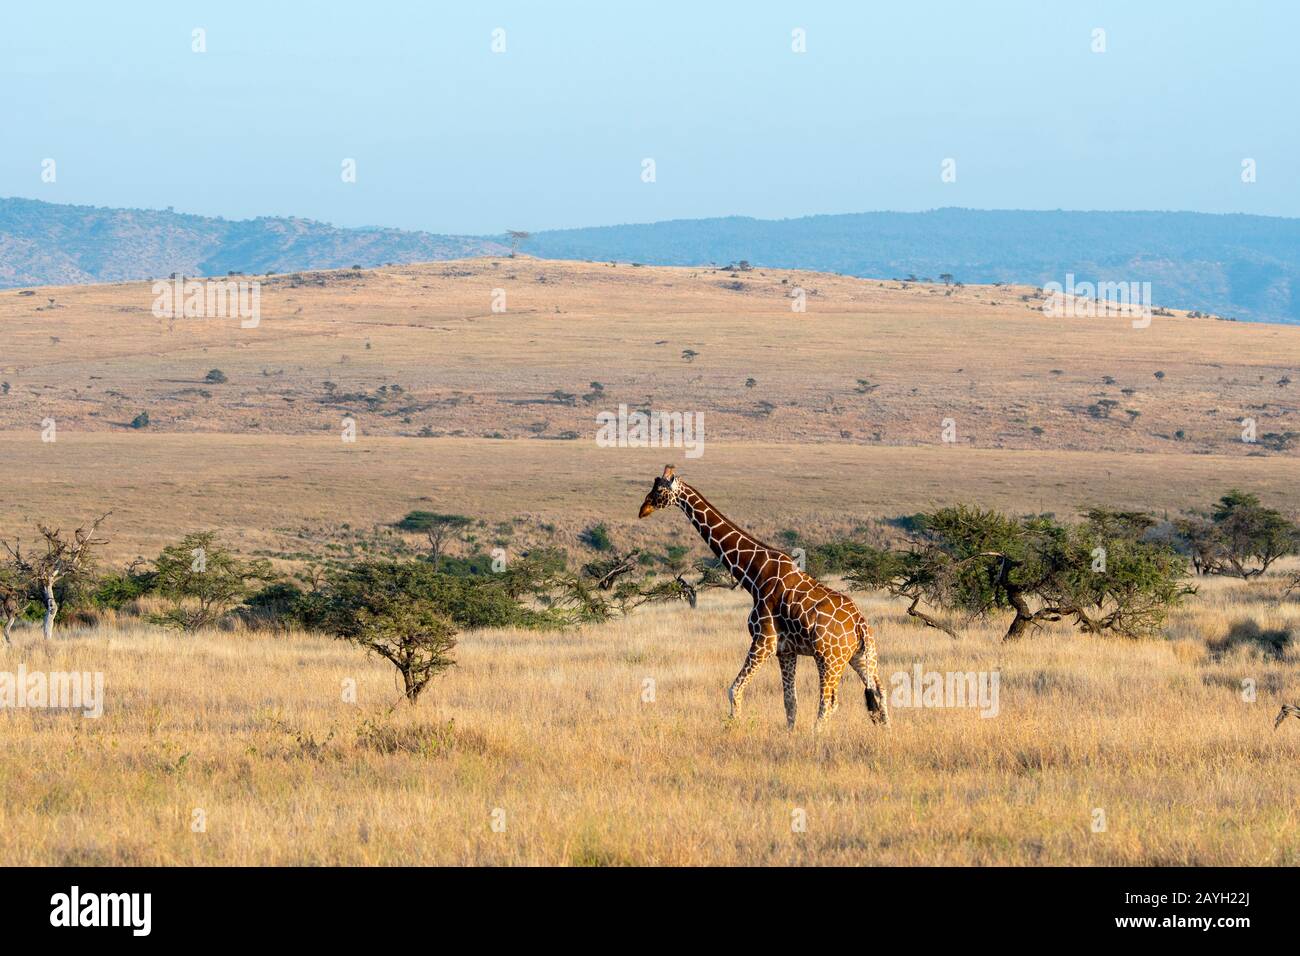 A Reticulated giraffe (Giraffa reticulata) at the Lewa Wildlife Conservancy in Kenya. Stock Photo